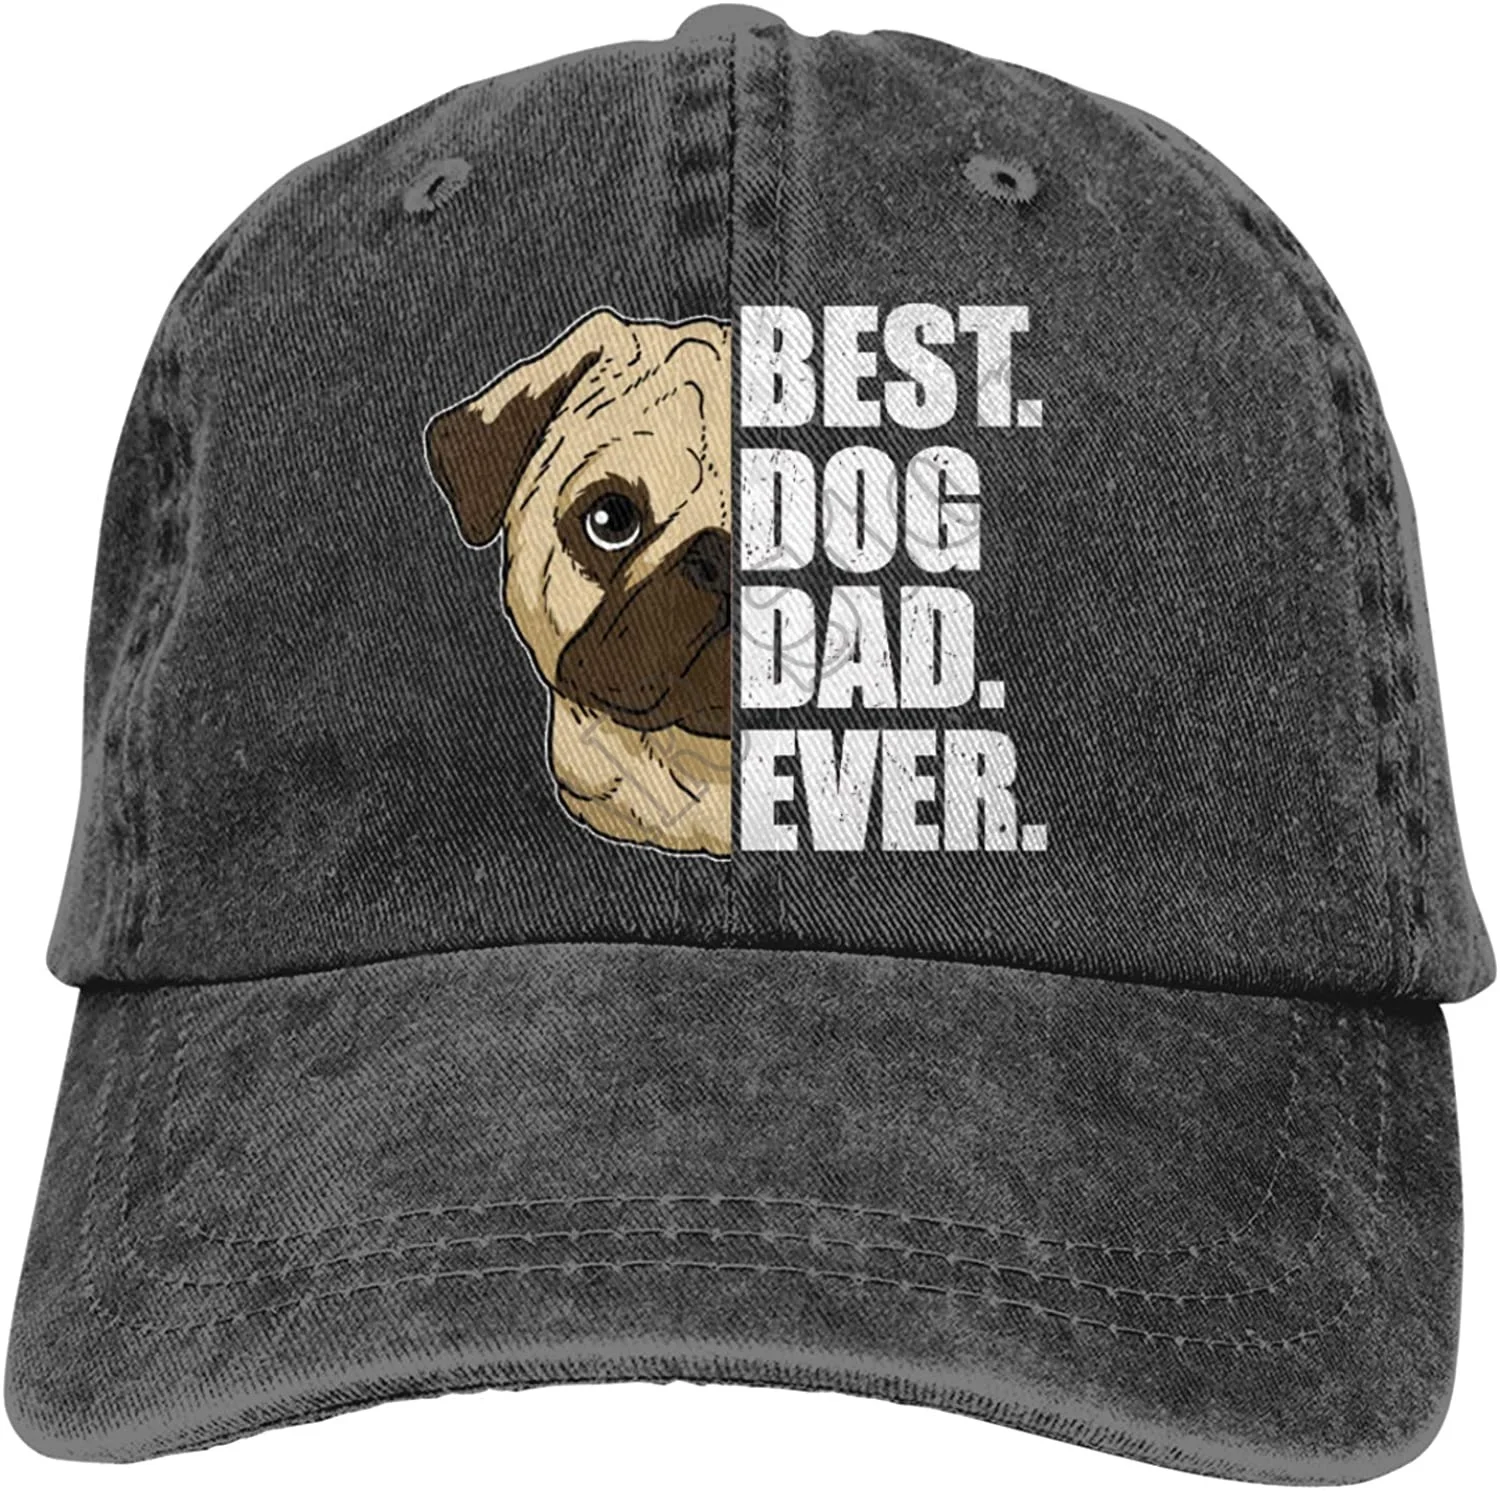 

Best Dog Dad Ever Pug Dog Lover Pet Customized Printed Pattern Adjustable Unisex Baseball Cowboy Hat